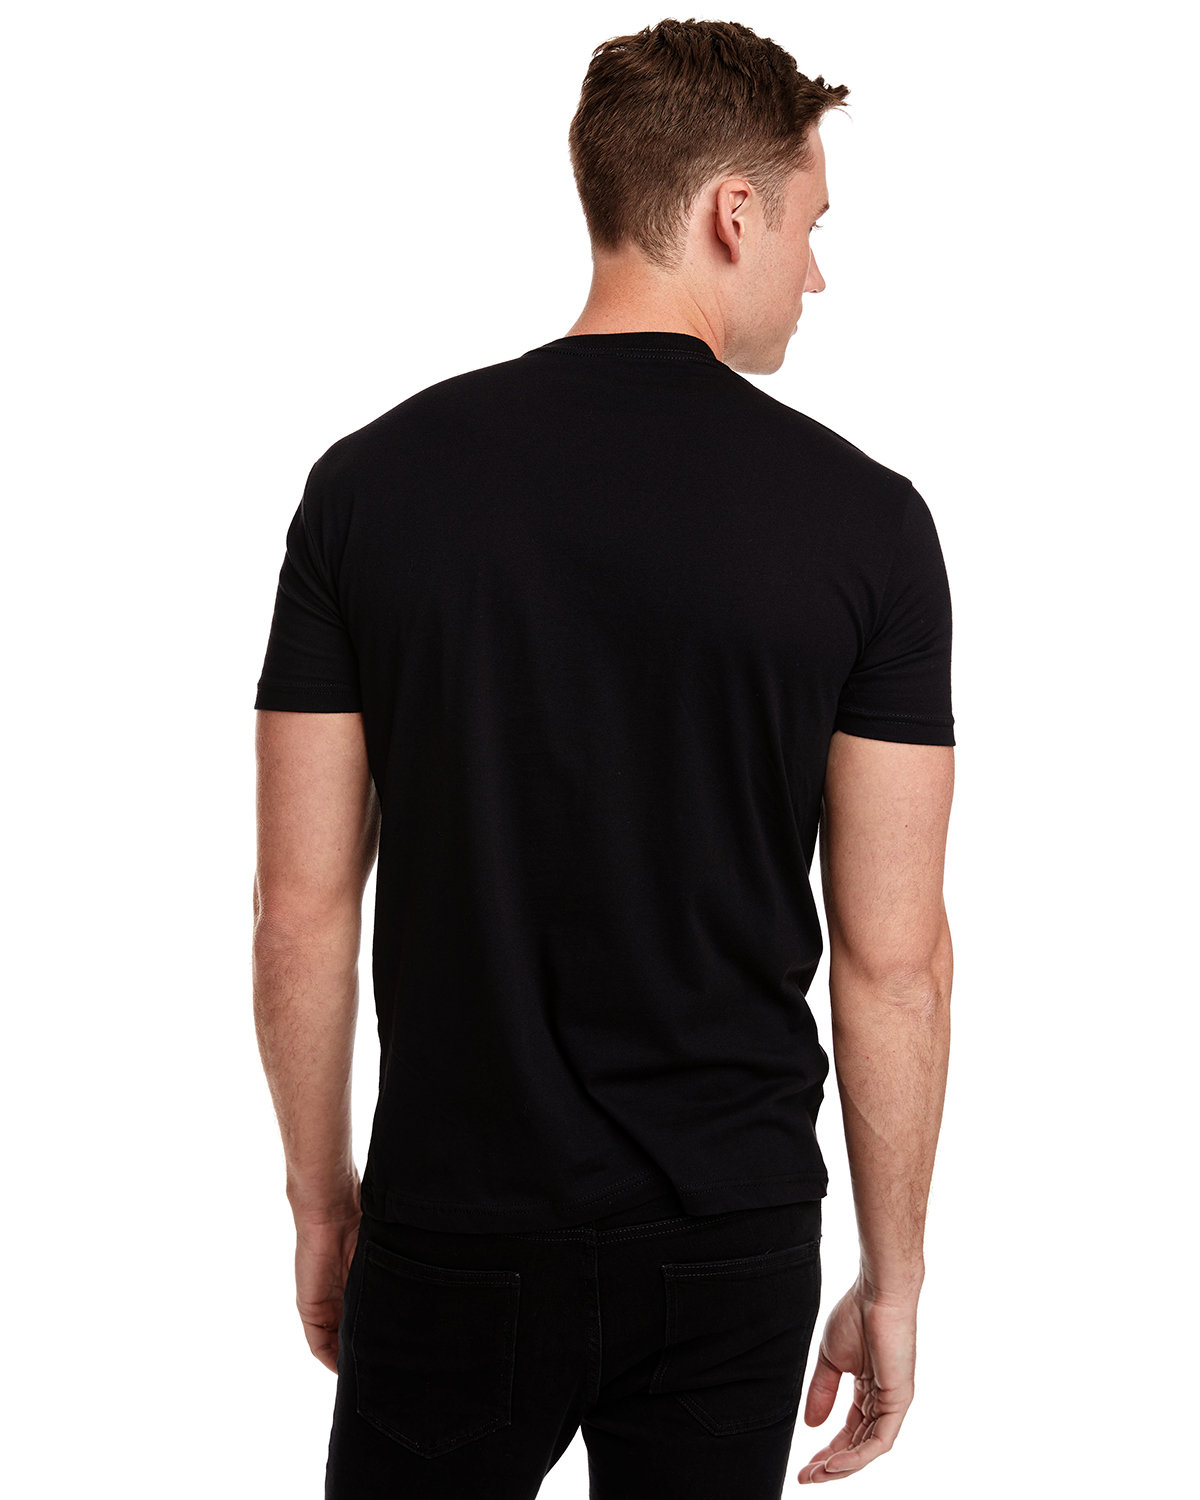 Next Level 3600 | Unisex Cotton T-Shirt | ShirtSpace